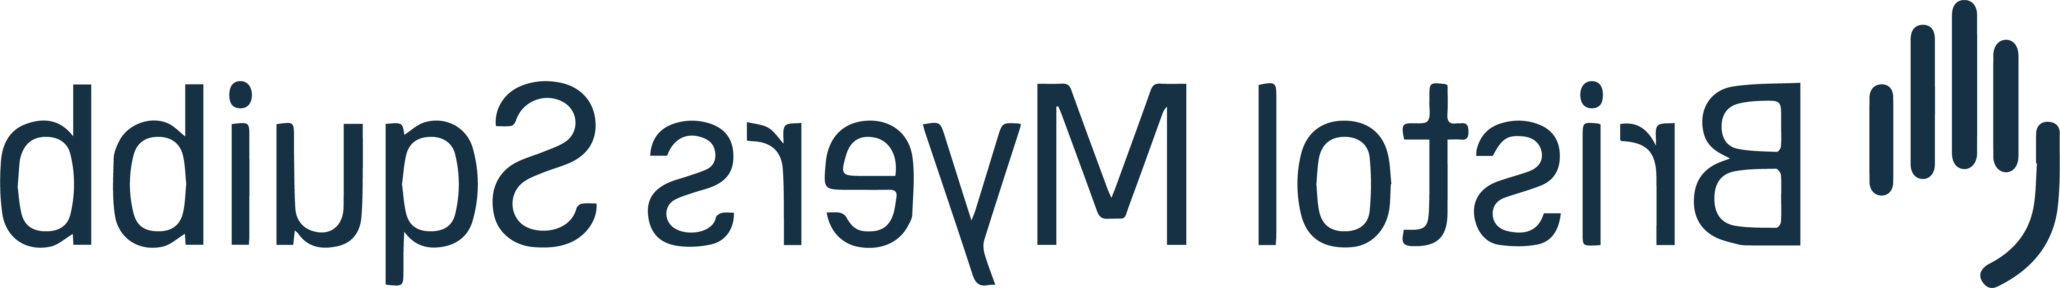 Client logo - Bristol Myers Squibb